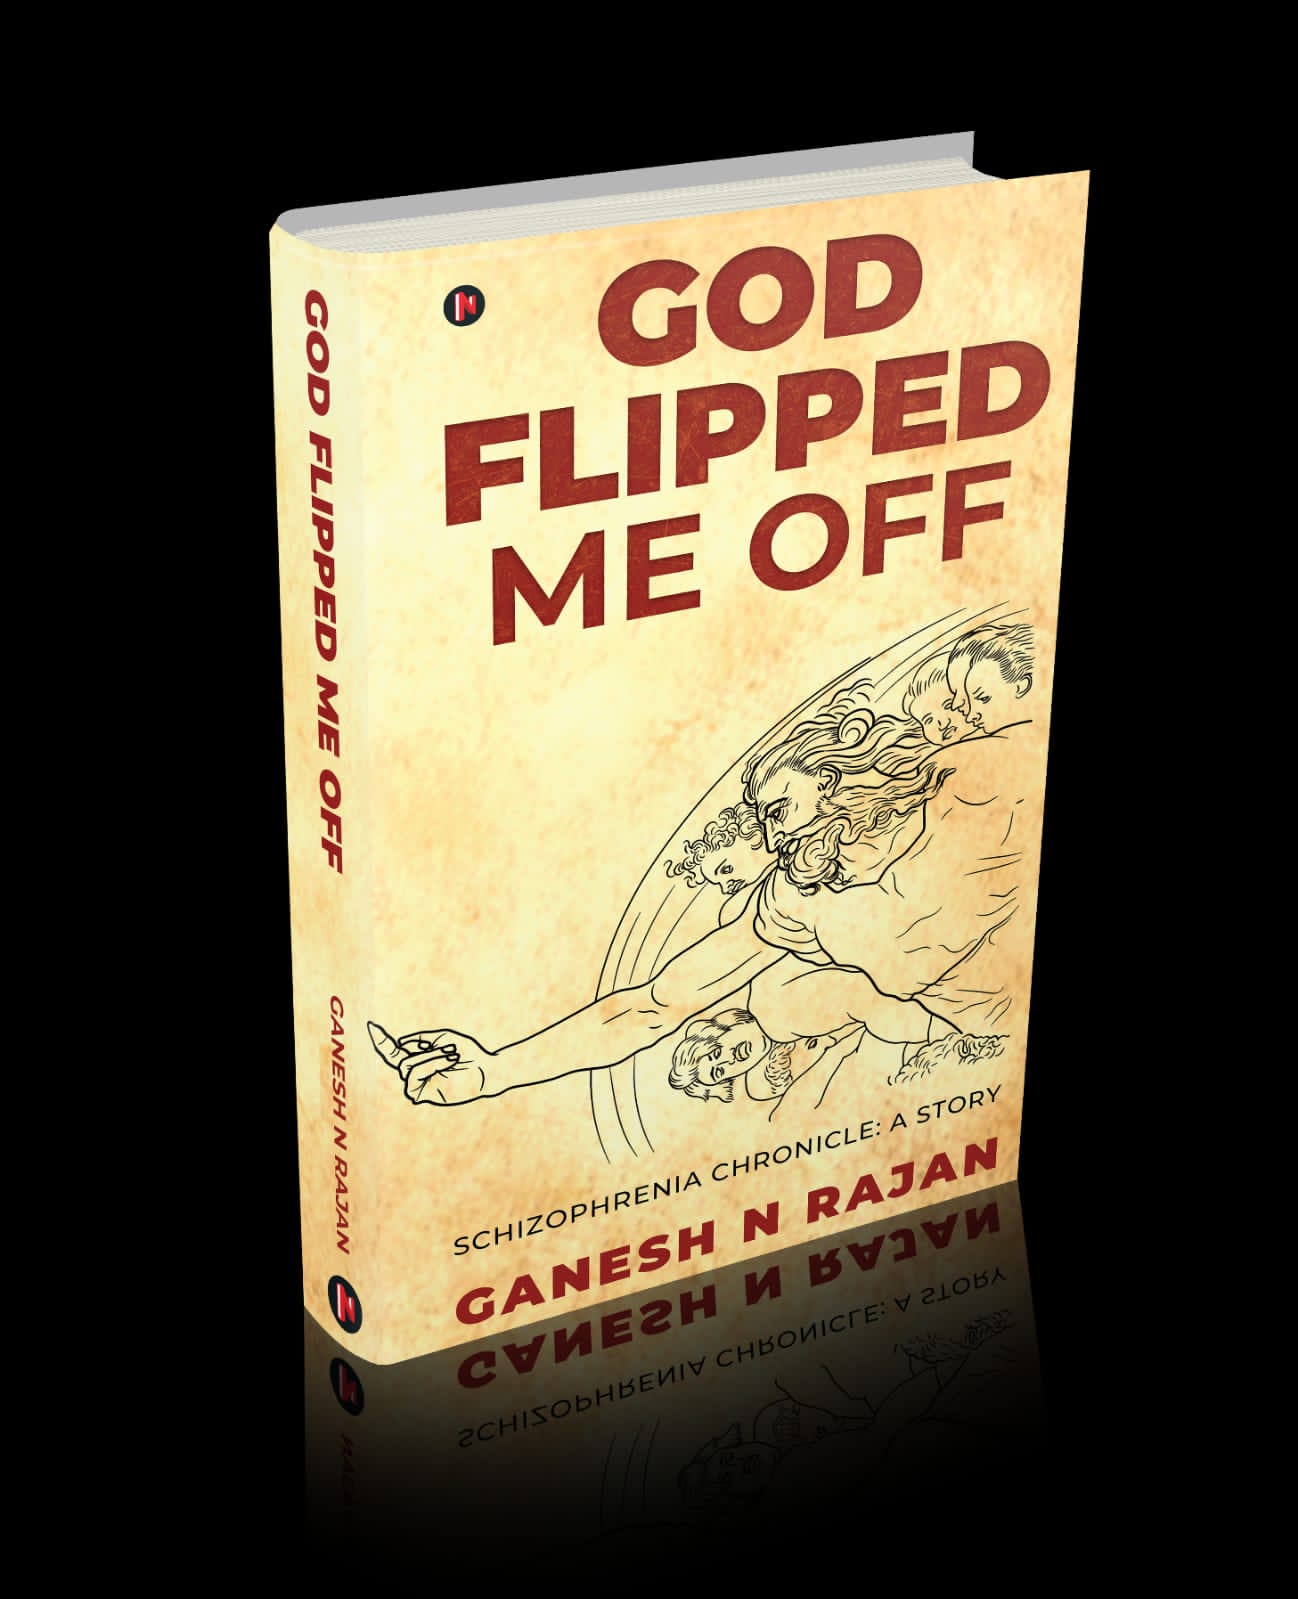 ‘God Flipped me off’, a new fiction book by Ganesh Rajan explains Schizophrenia through a story